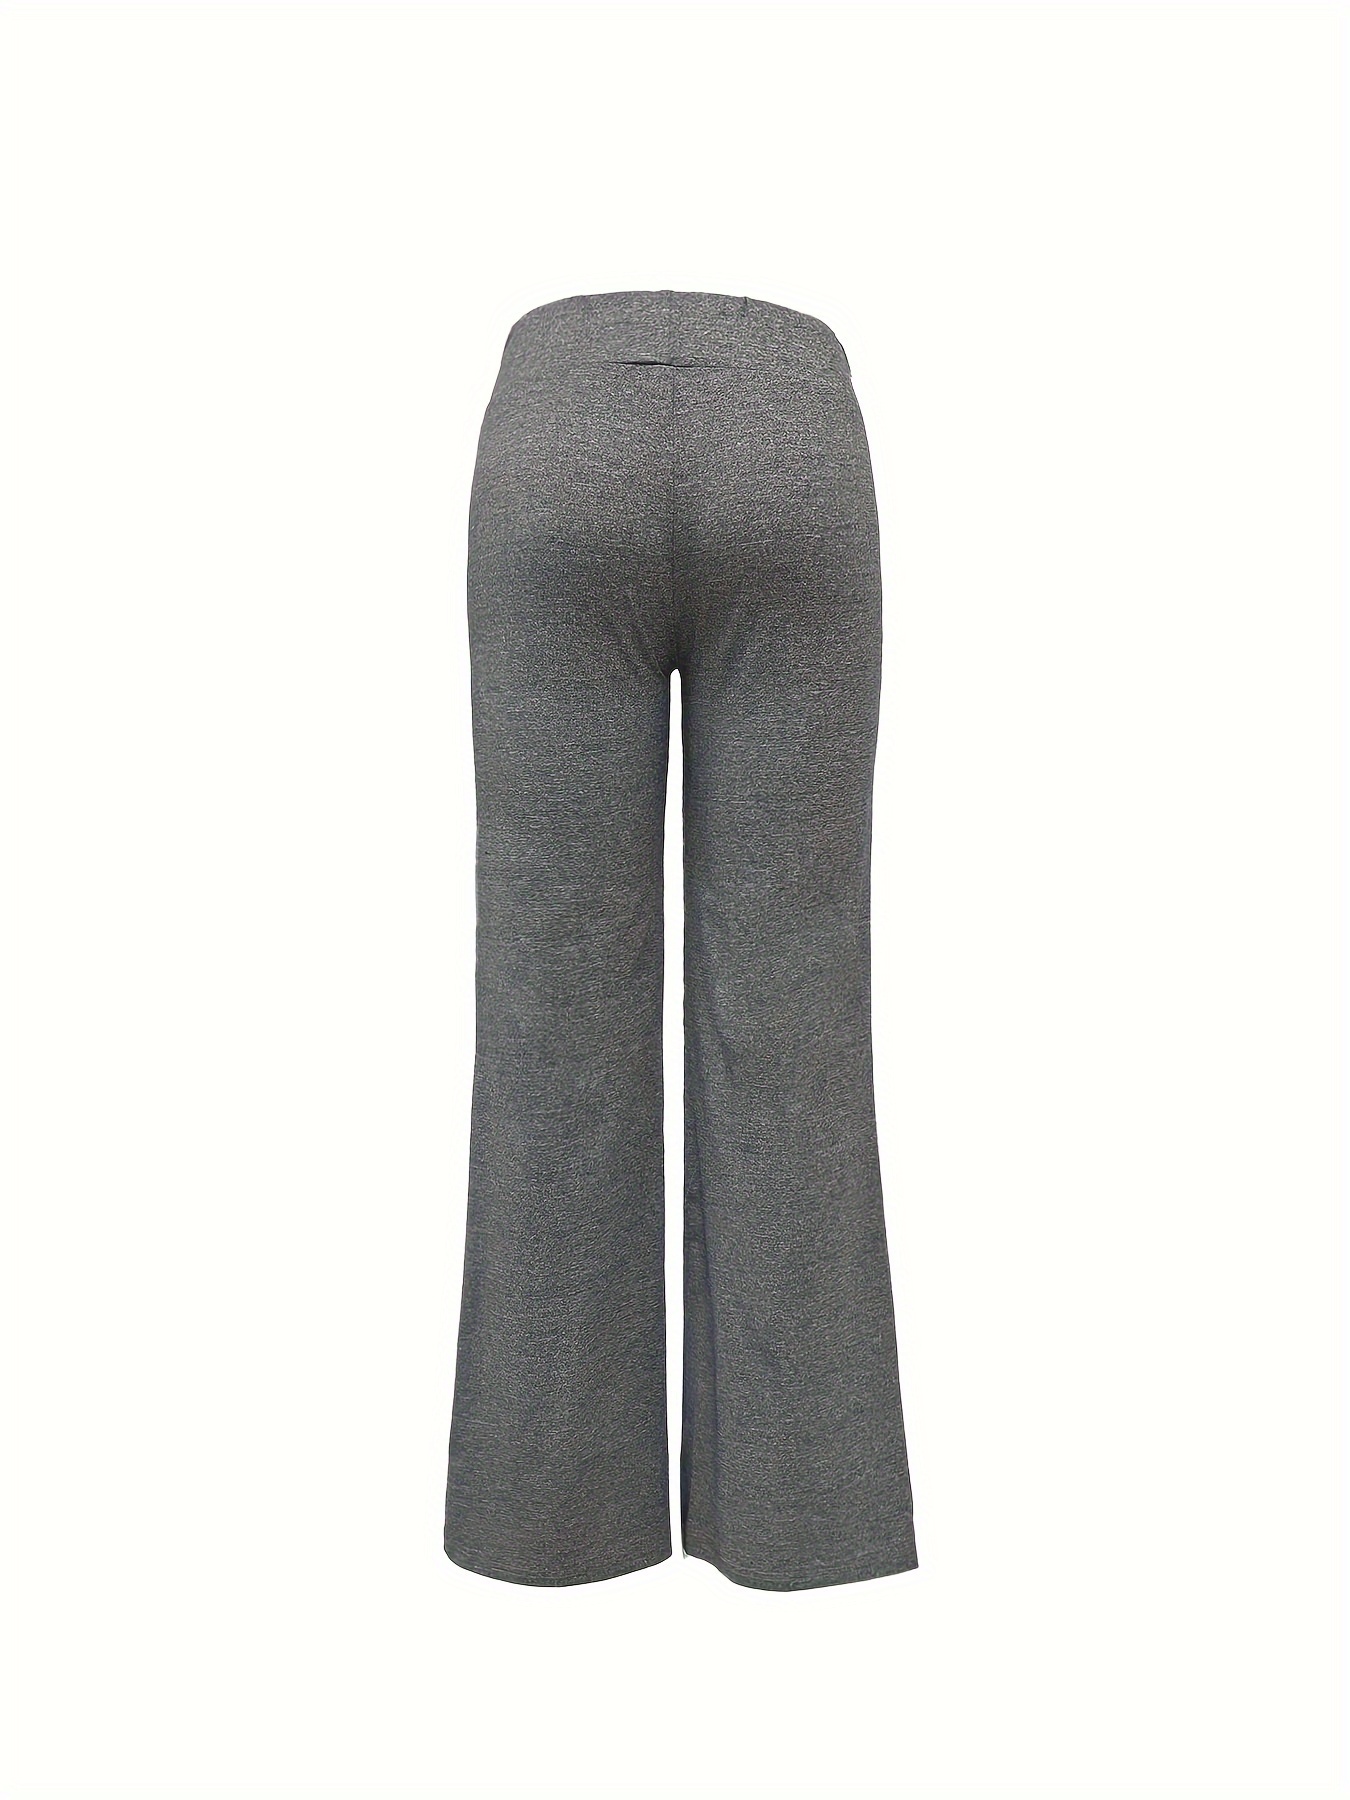 Plus Size Sports Pants Women's Plus Solid Elastic Drawstring